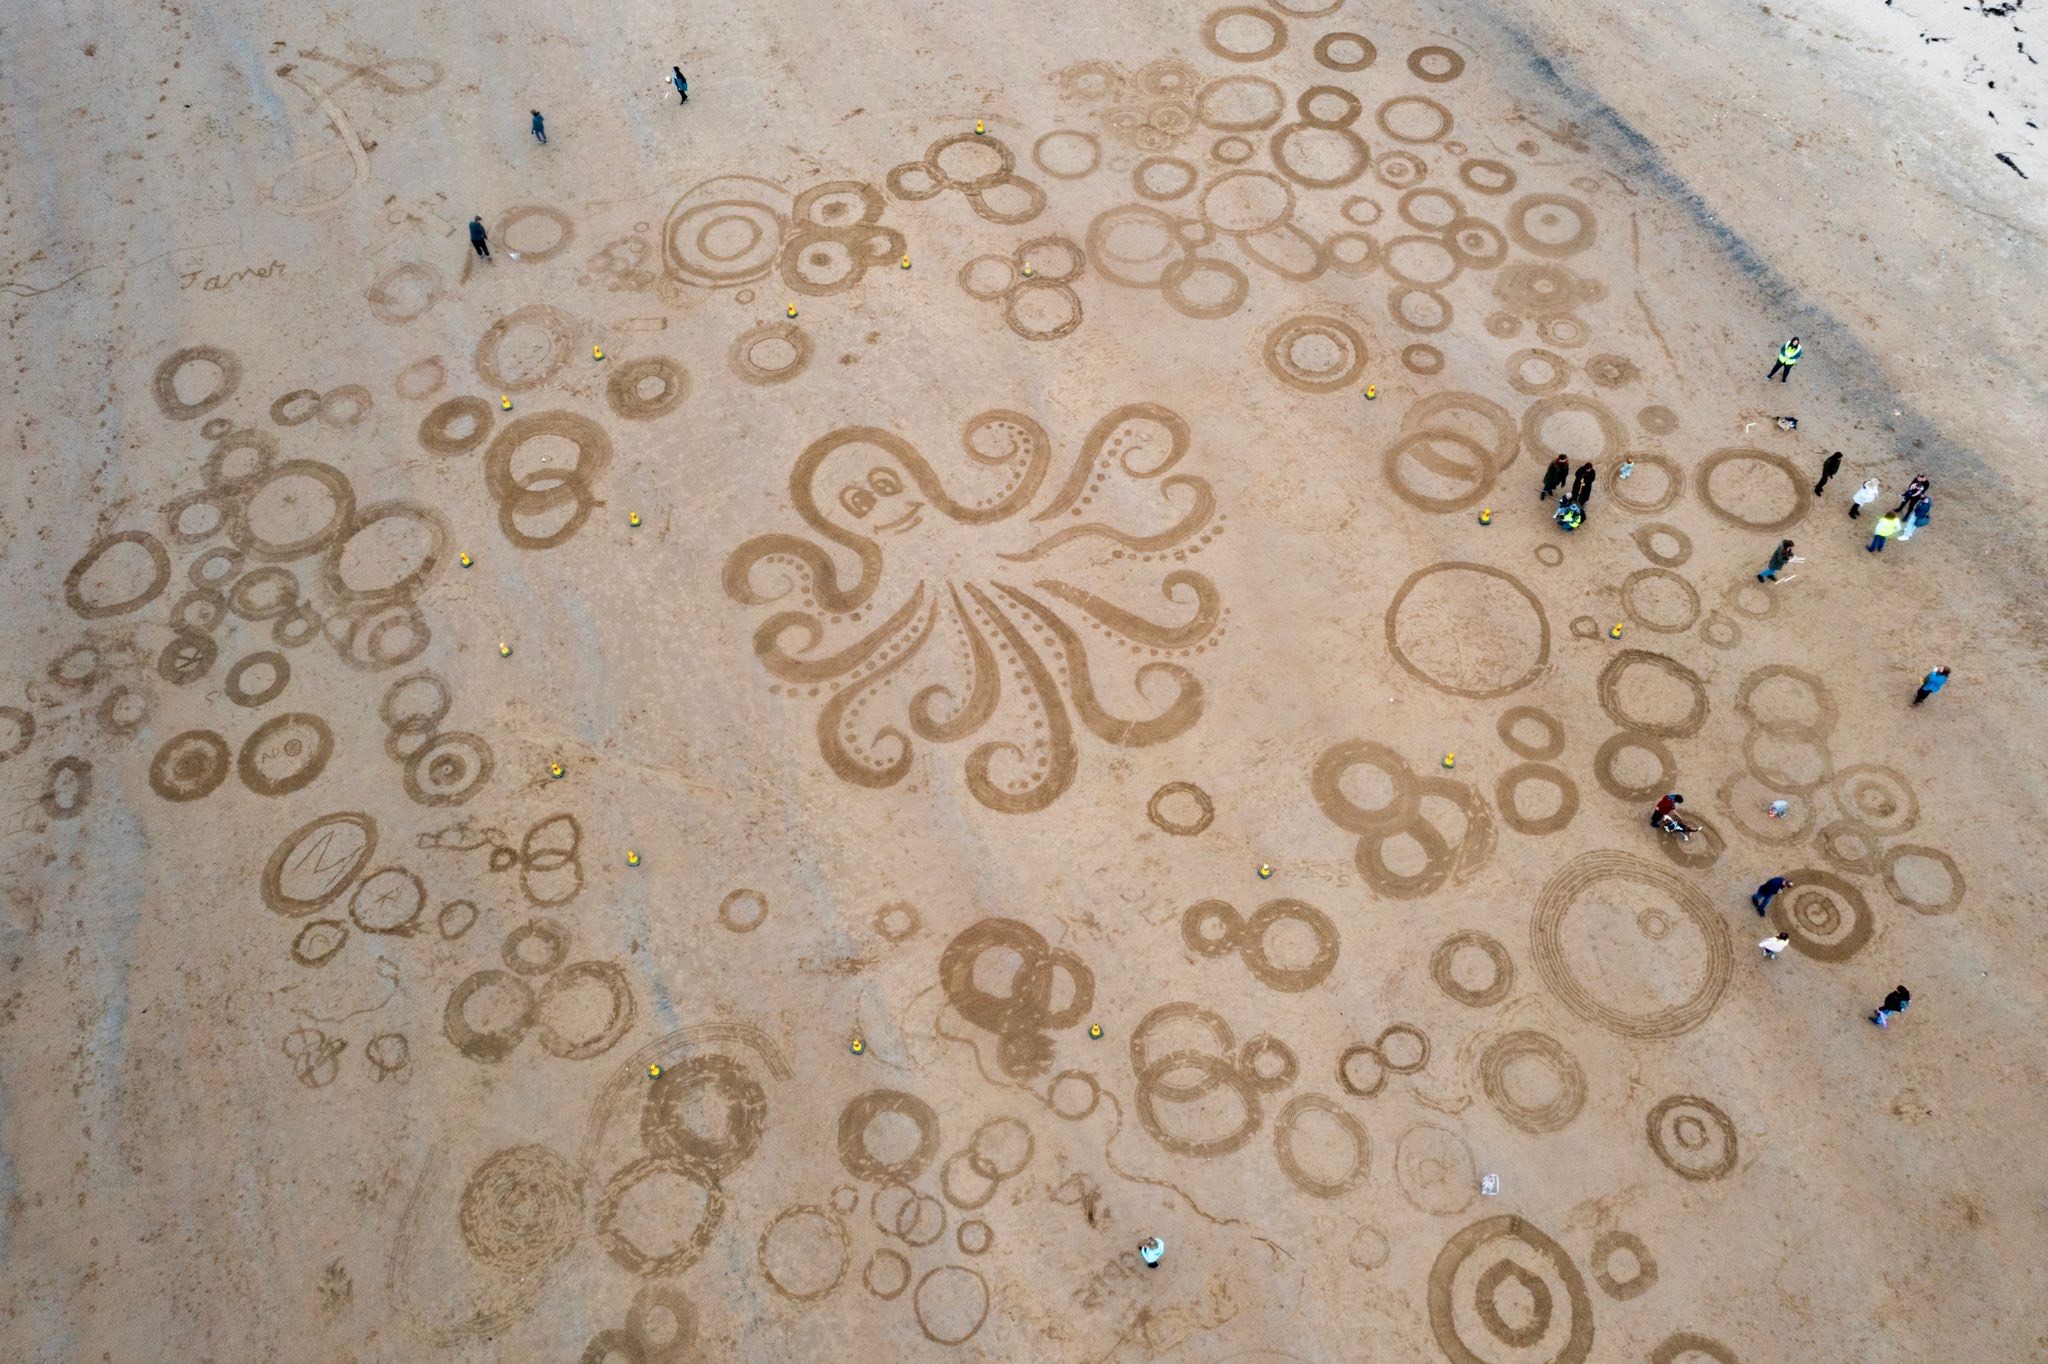 Aerial photograph of sand art octopus design 